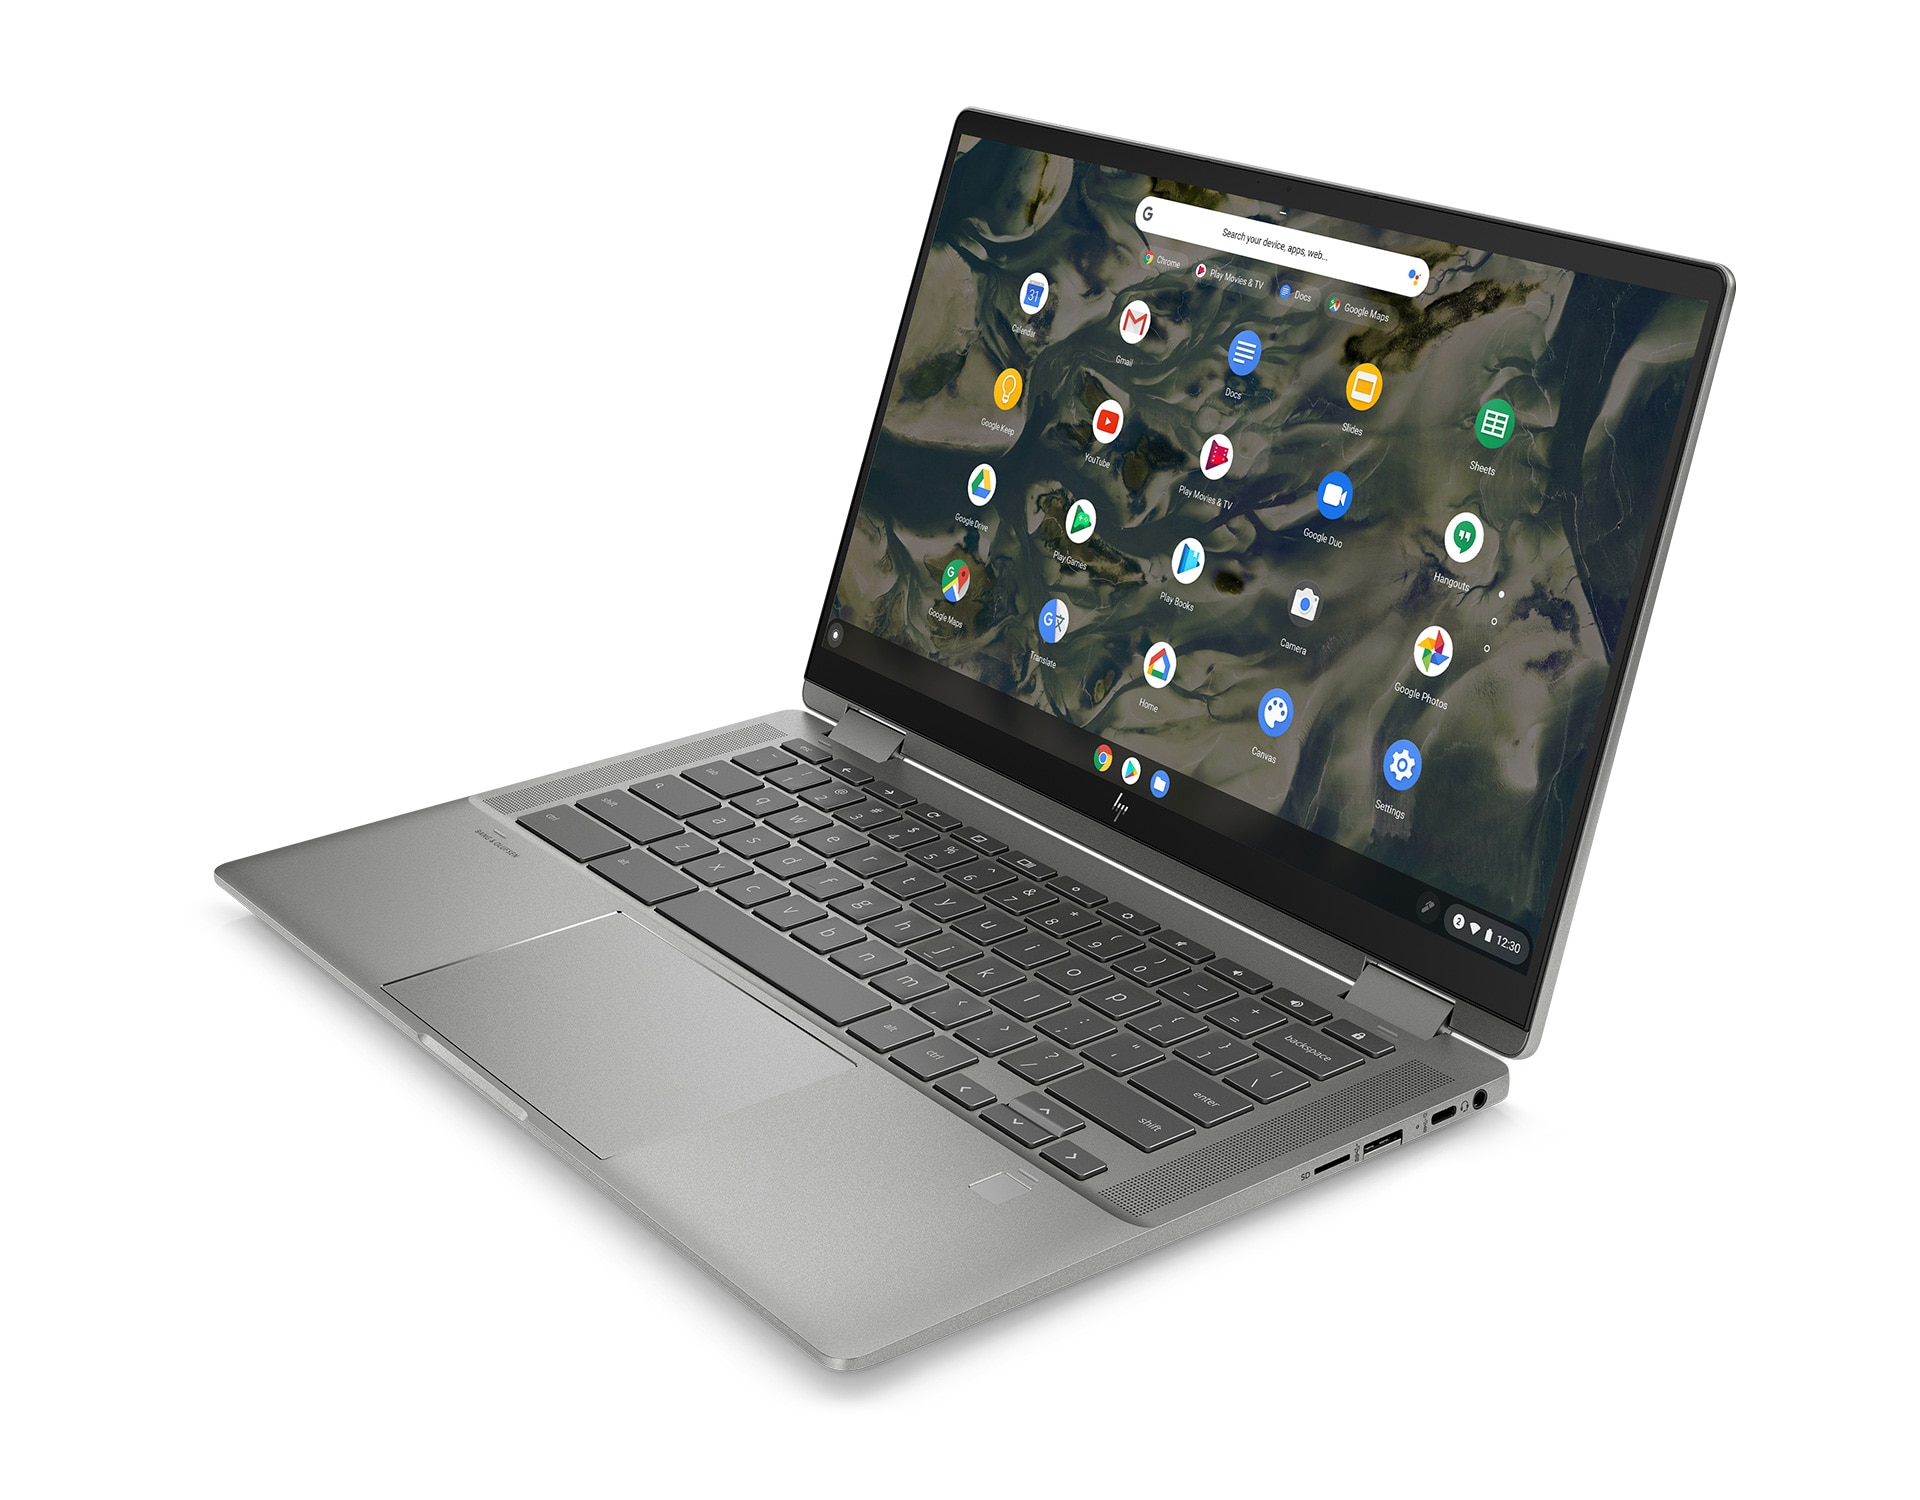 HP Chromebook x360 14c